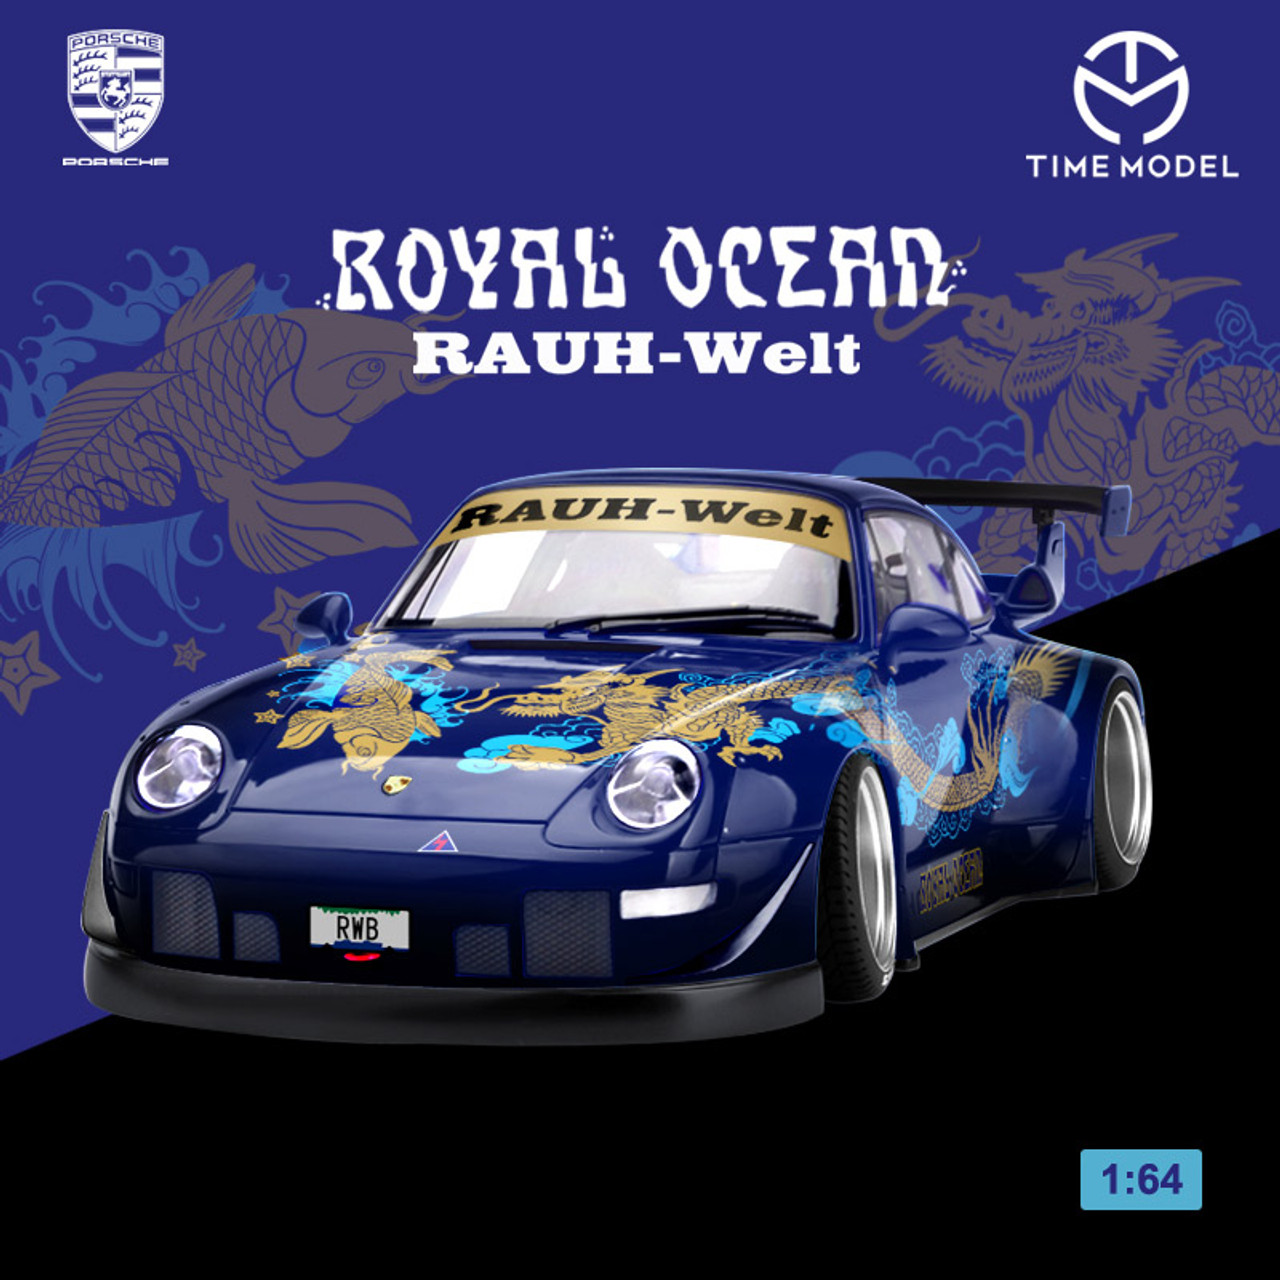 1/64 Porsche RWB 930 Rauh-Welt Royal Ocean Diecast Car Model w/ 3D Frame Limited